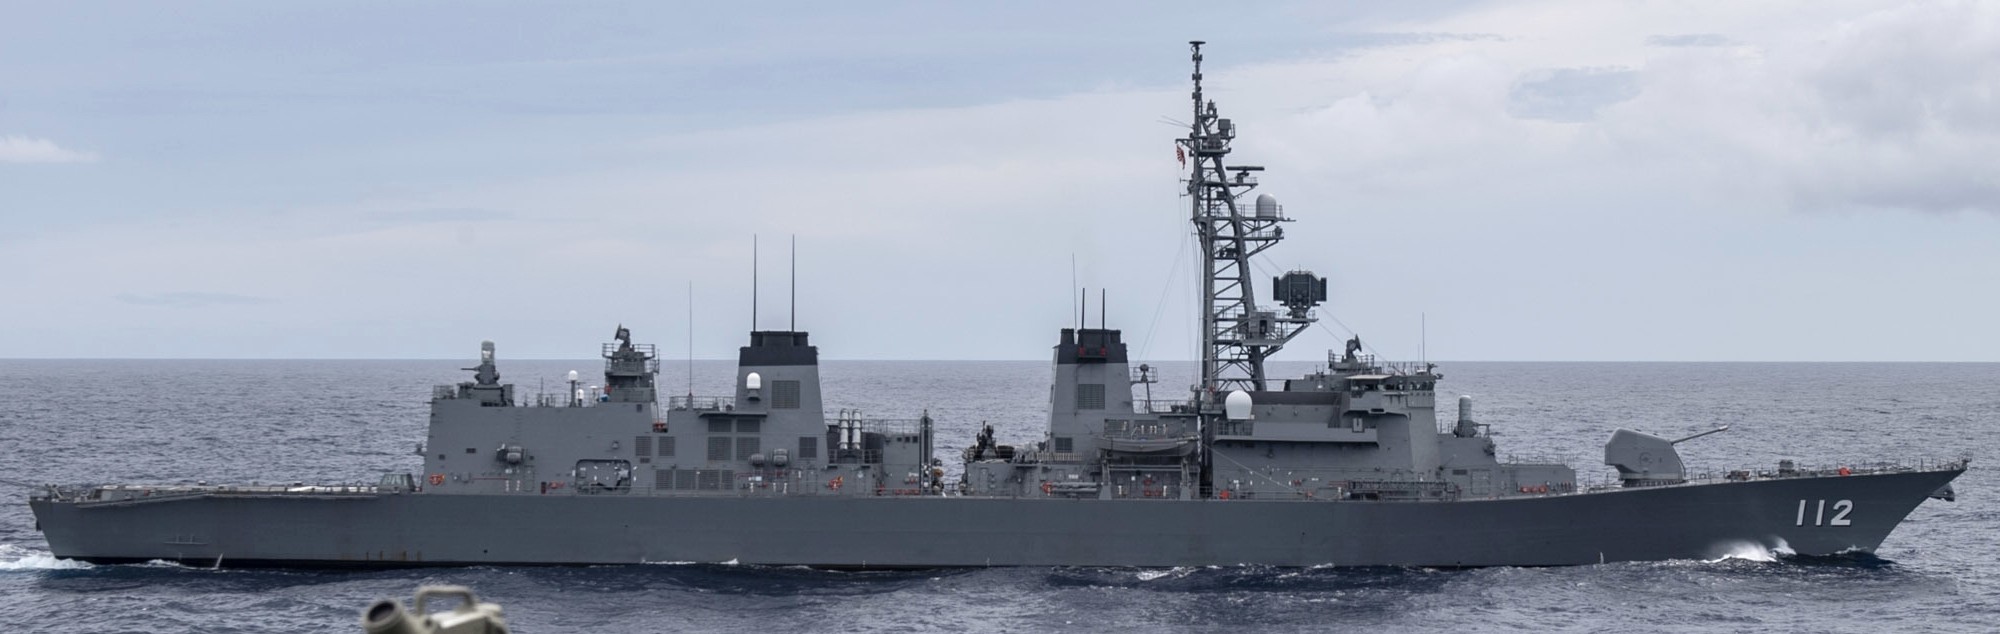 dd-112 js makinami takanami class destroyer japan maritime self defense force jmsdf 19